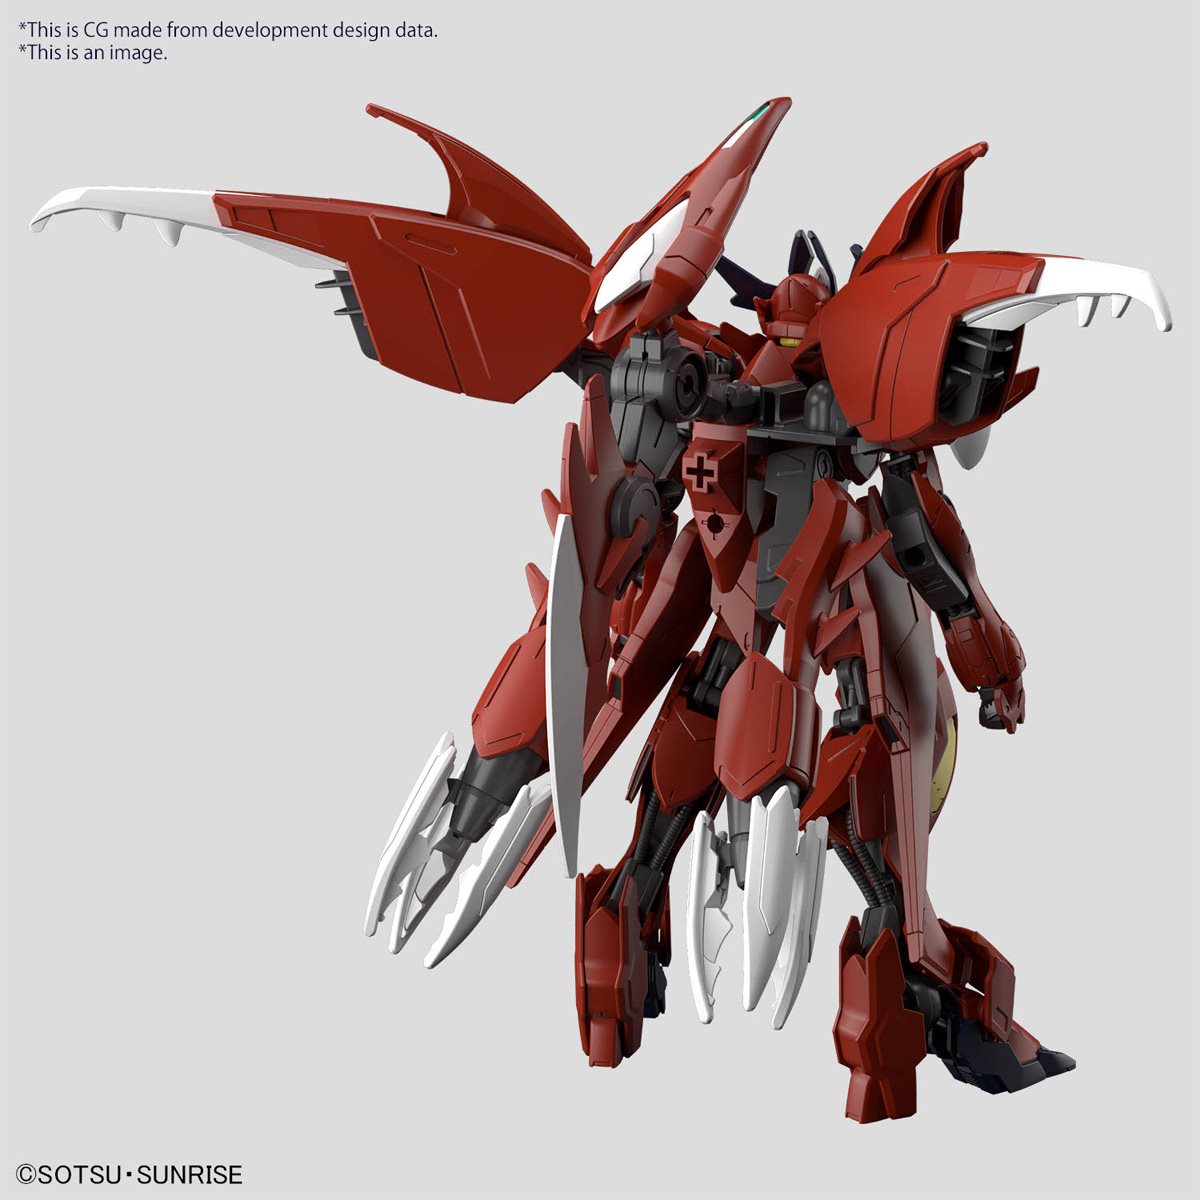 Bandai Hobby Gunpla High Grade Model Kit: Gundam Build Metaverse - Amazing Barbatos Lupus Escala 1/144 Kit De Plastico